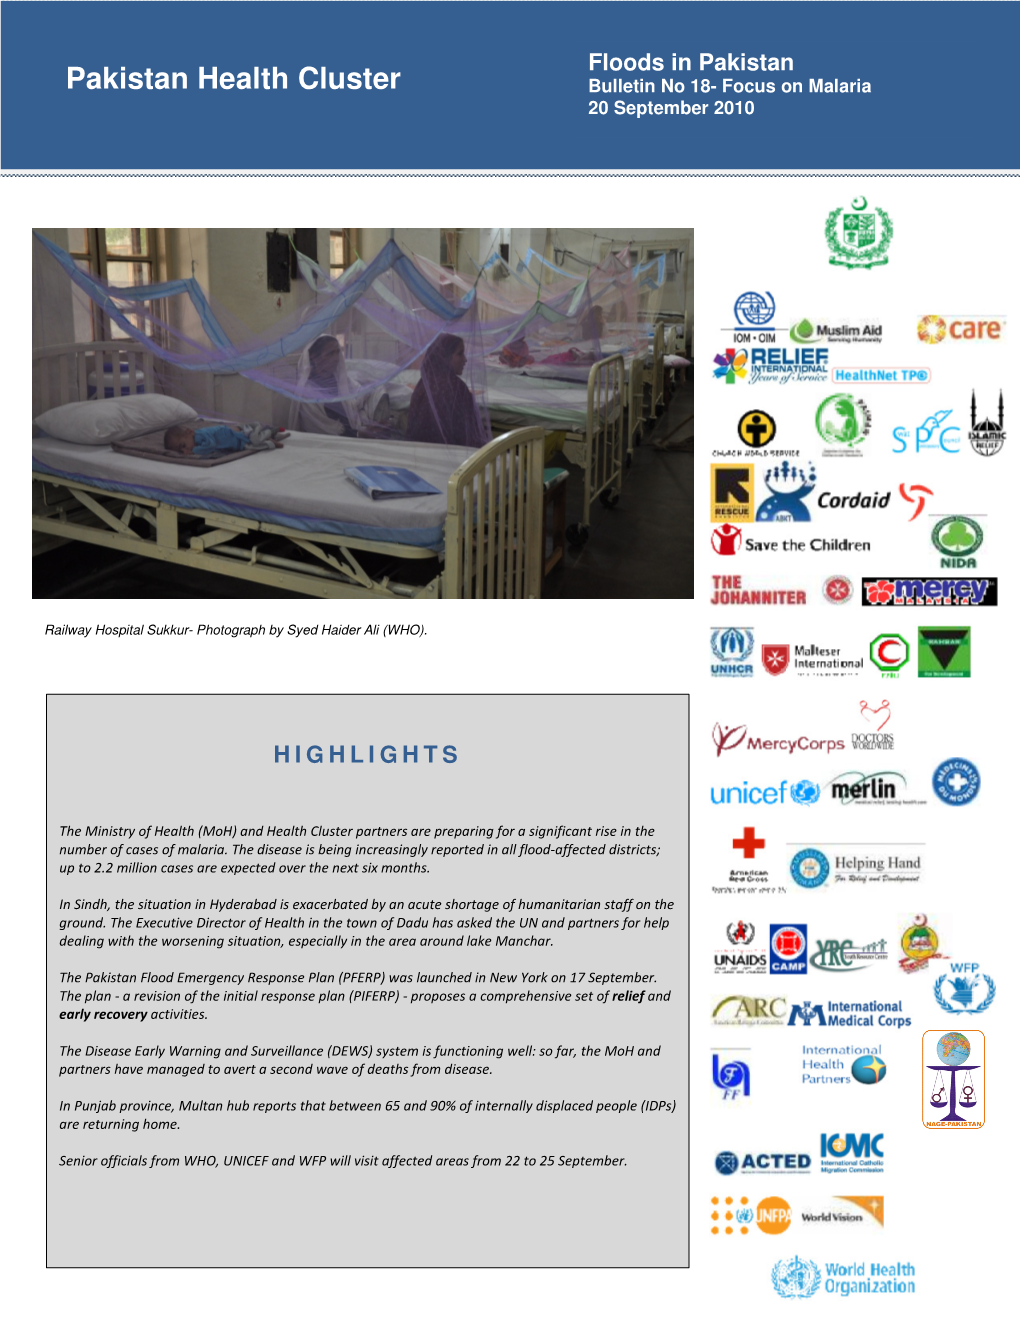 Pakistan Health Cluster Bulletin No 18- Focus on Malaria 20 September 2010